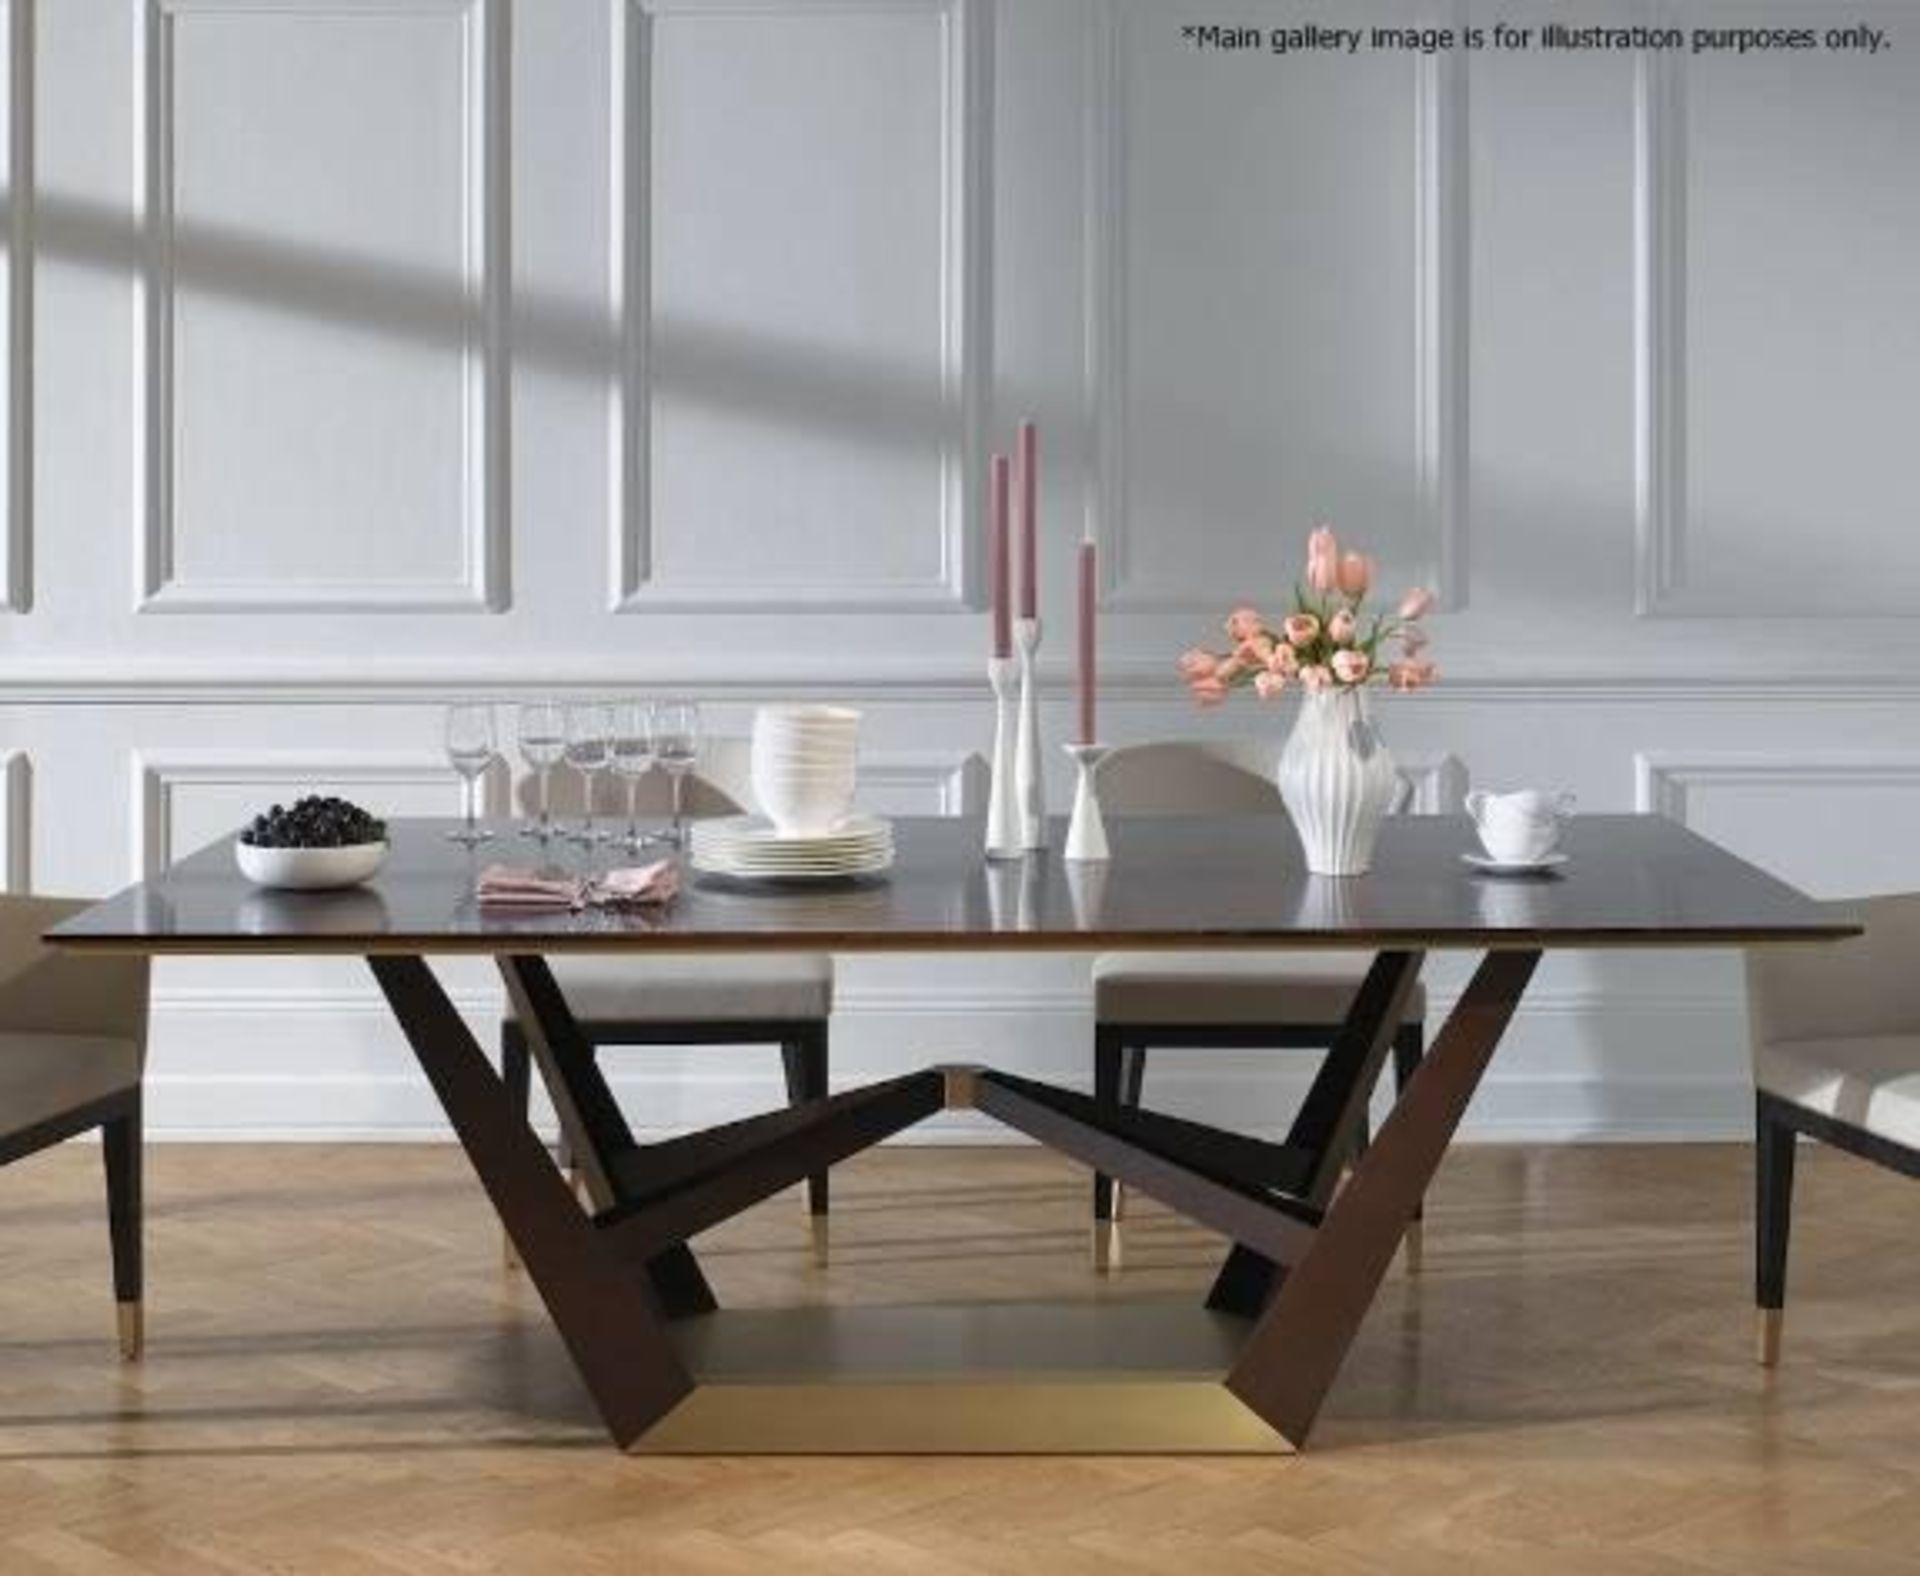 1 x PORADA Ellington Dining Table - 2.6 Metres In Length - Ref: 5568978/5568980 BK3/2909